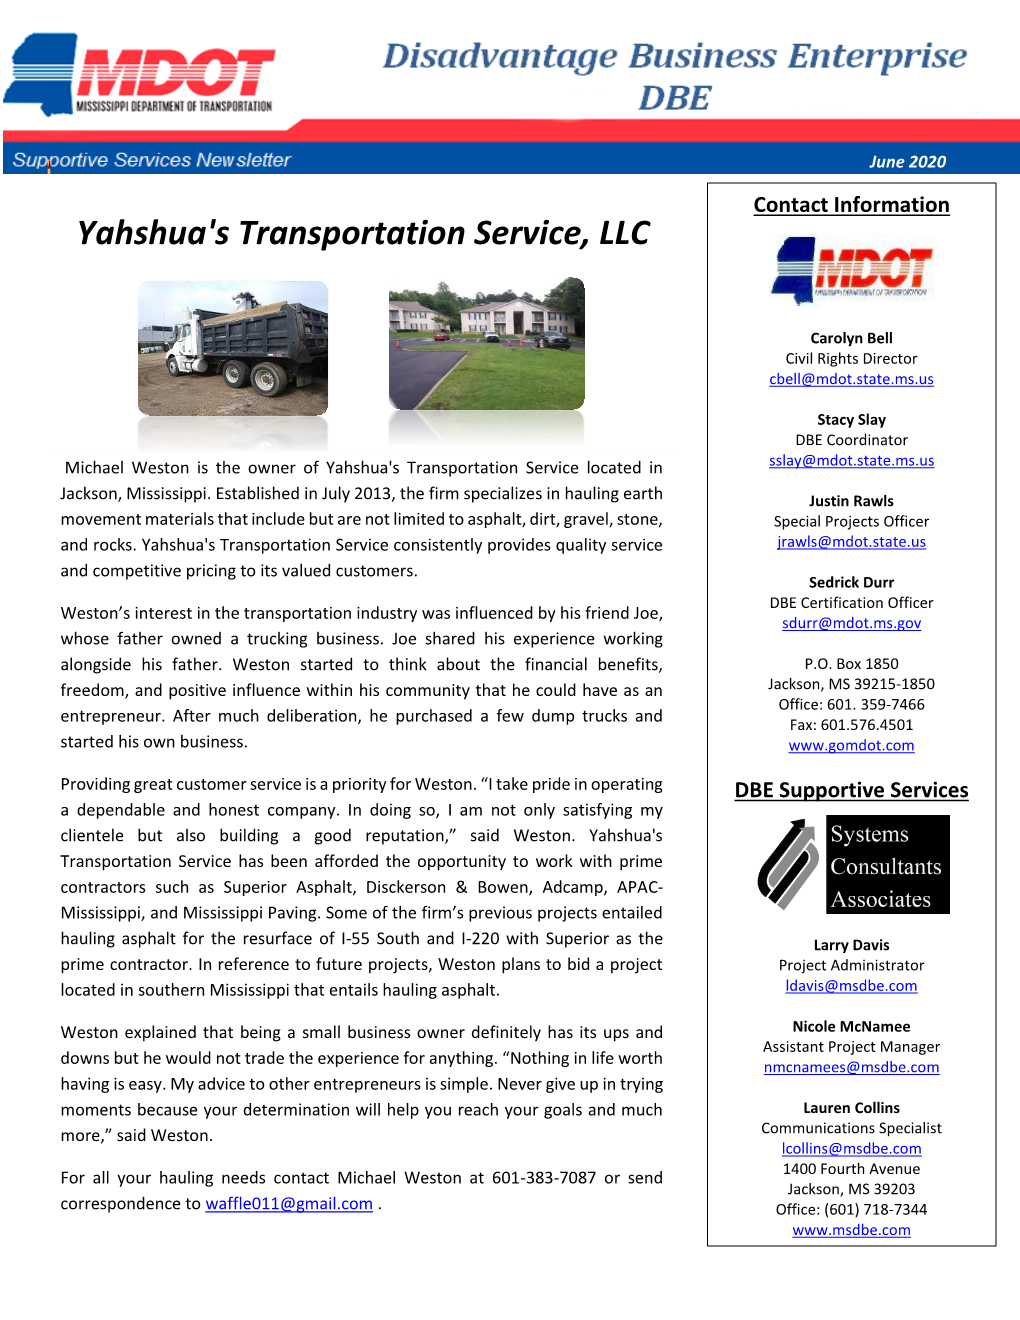 Yahshua's Transportation Service, LLC